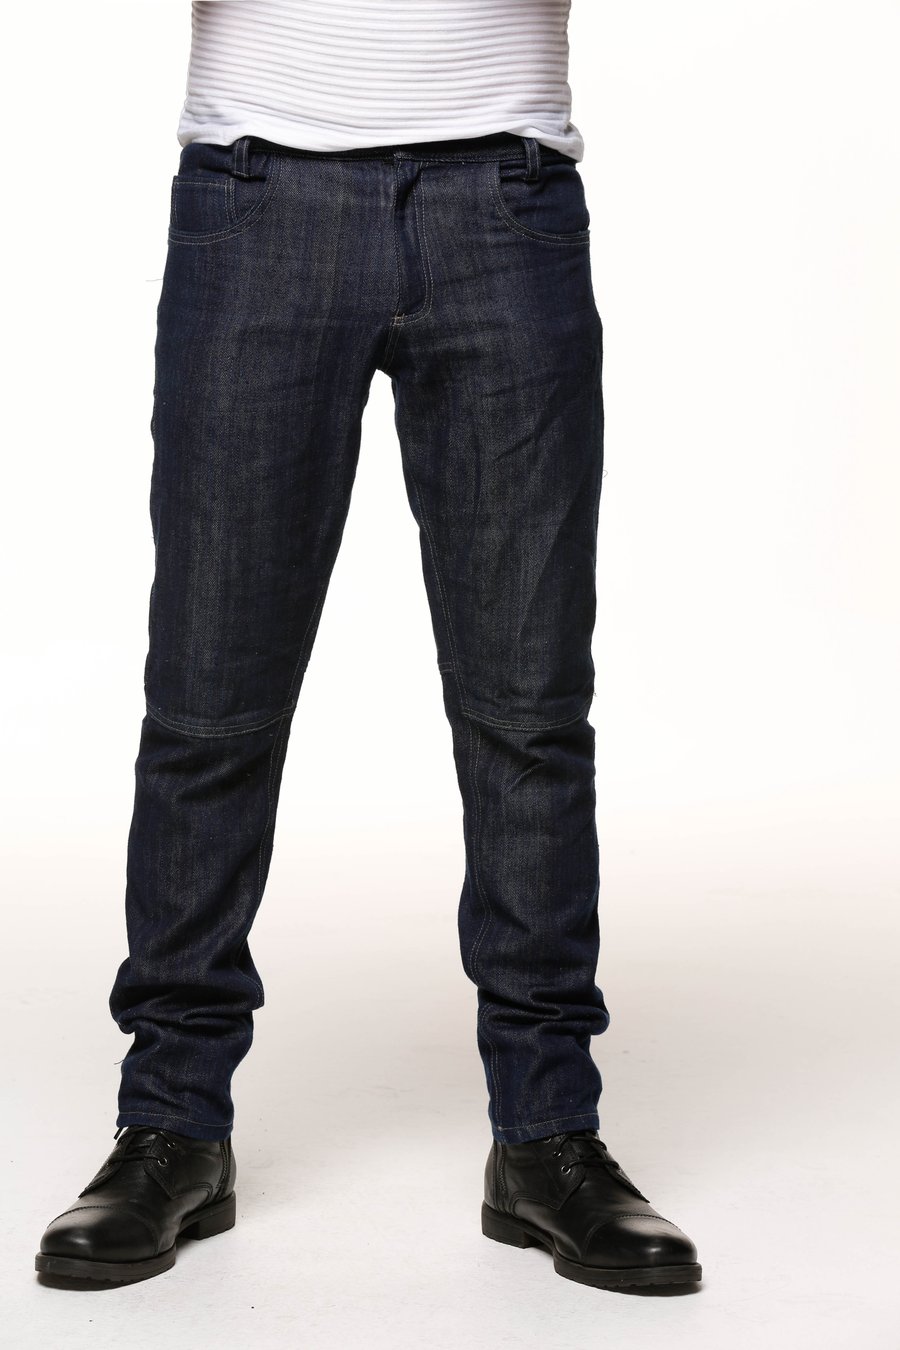 Image of Classic Mens Denim Jeans